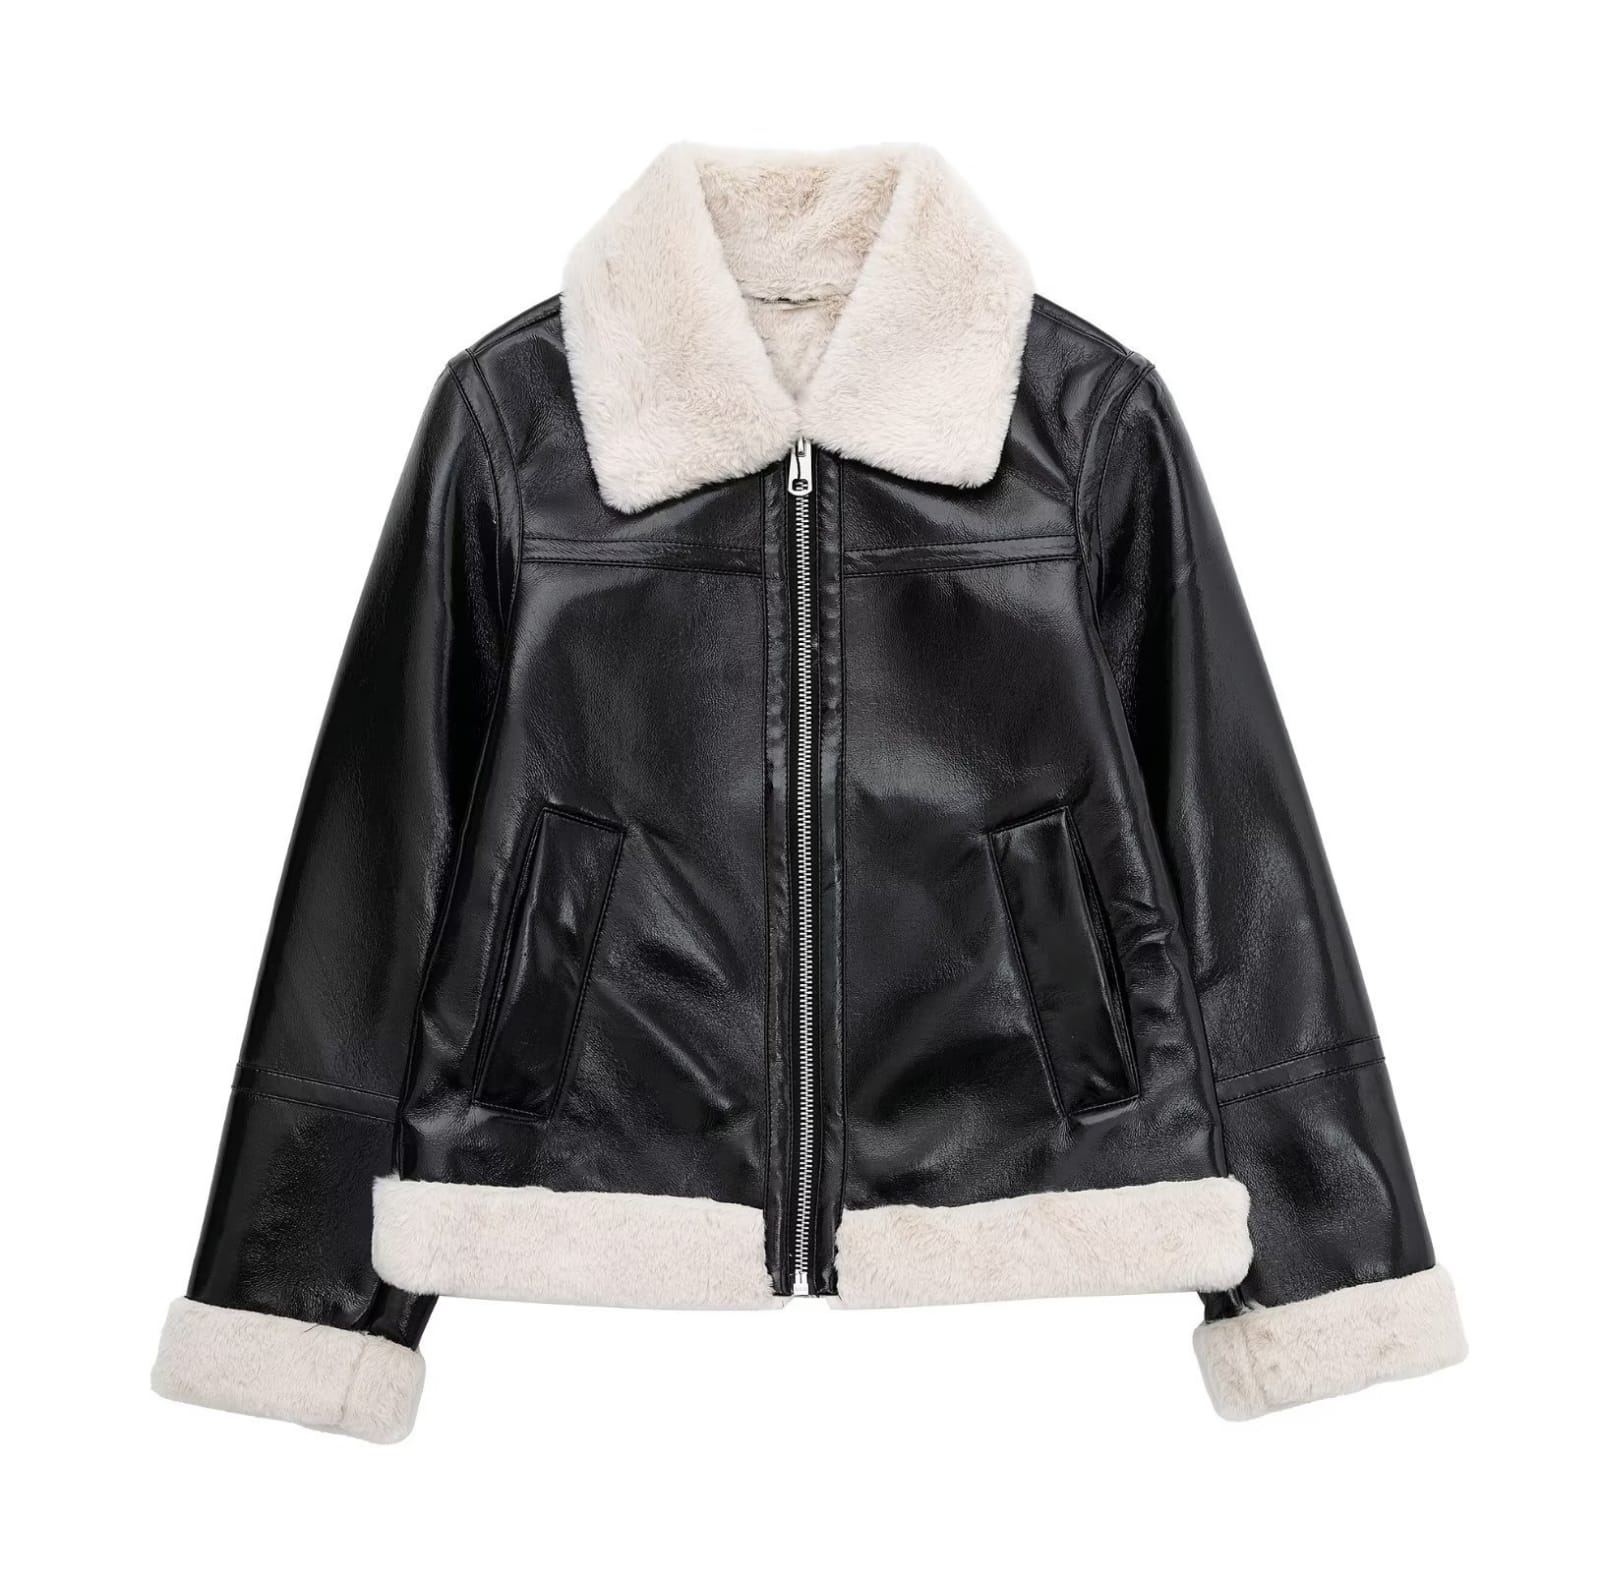 Leader Fur Jacket – Classic Style Boutique